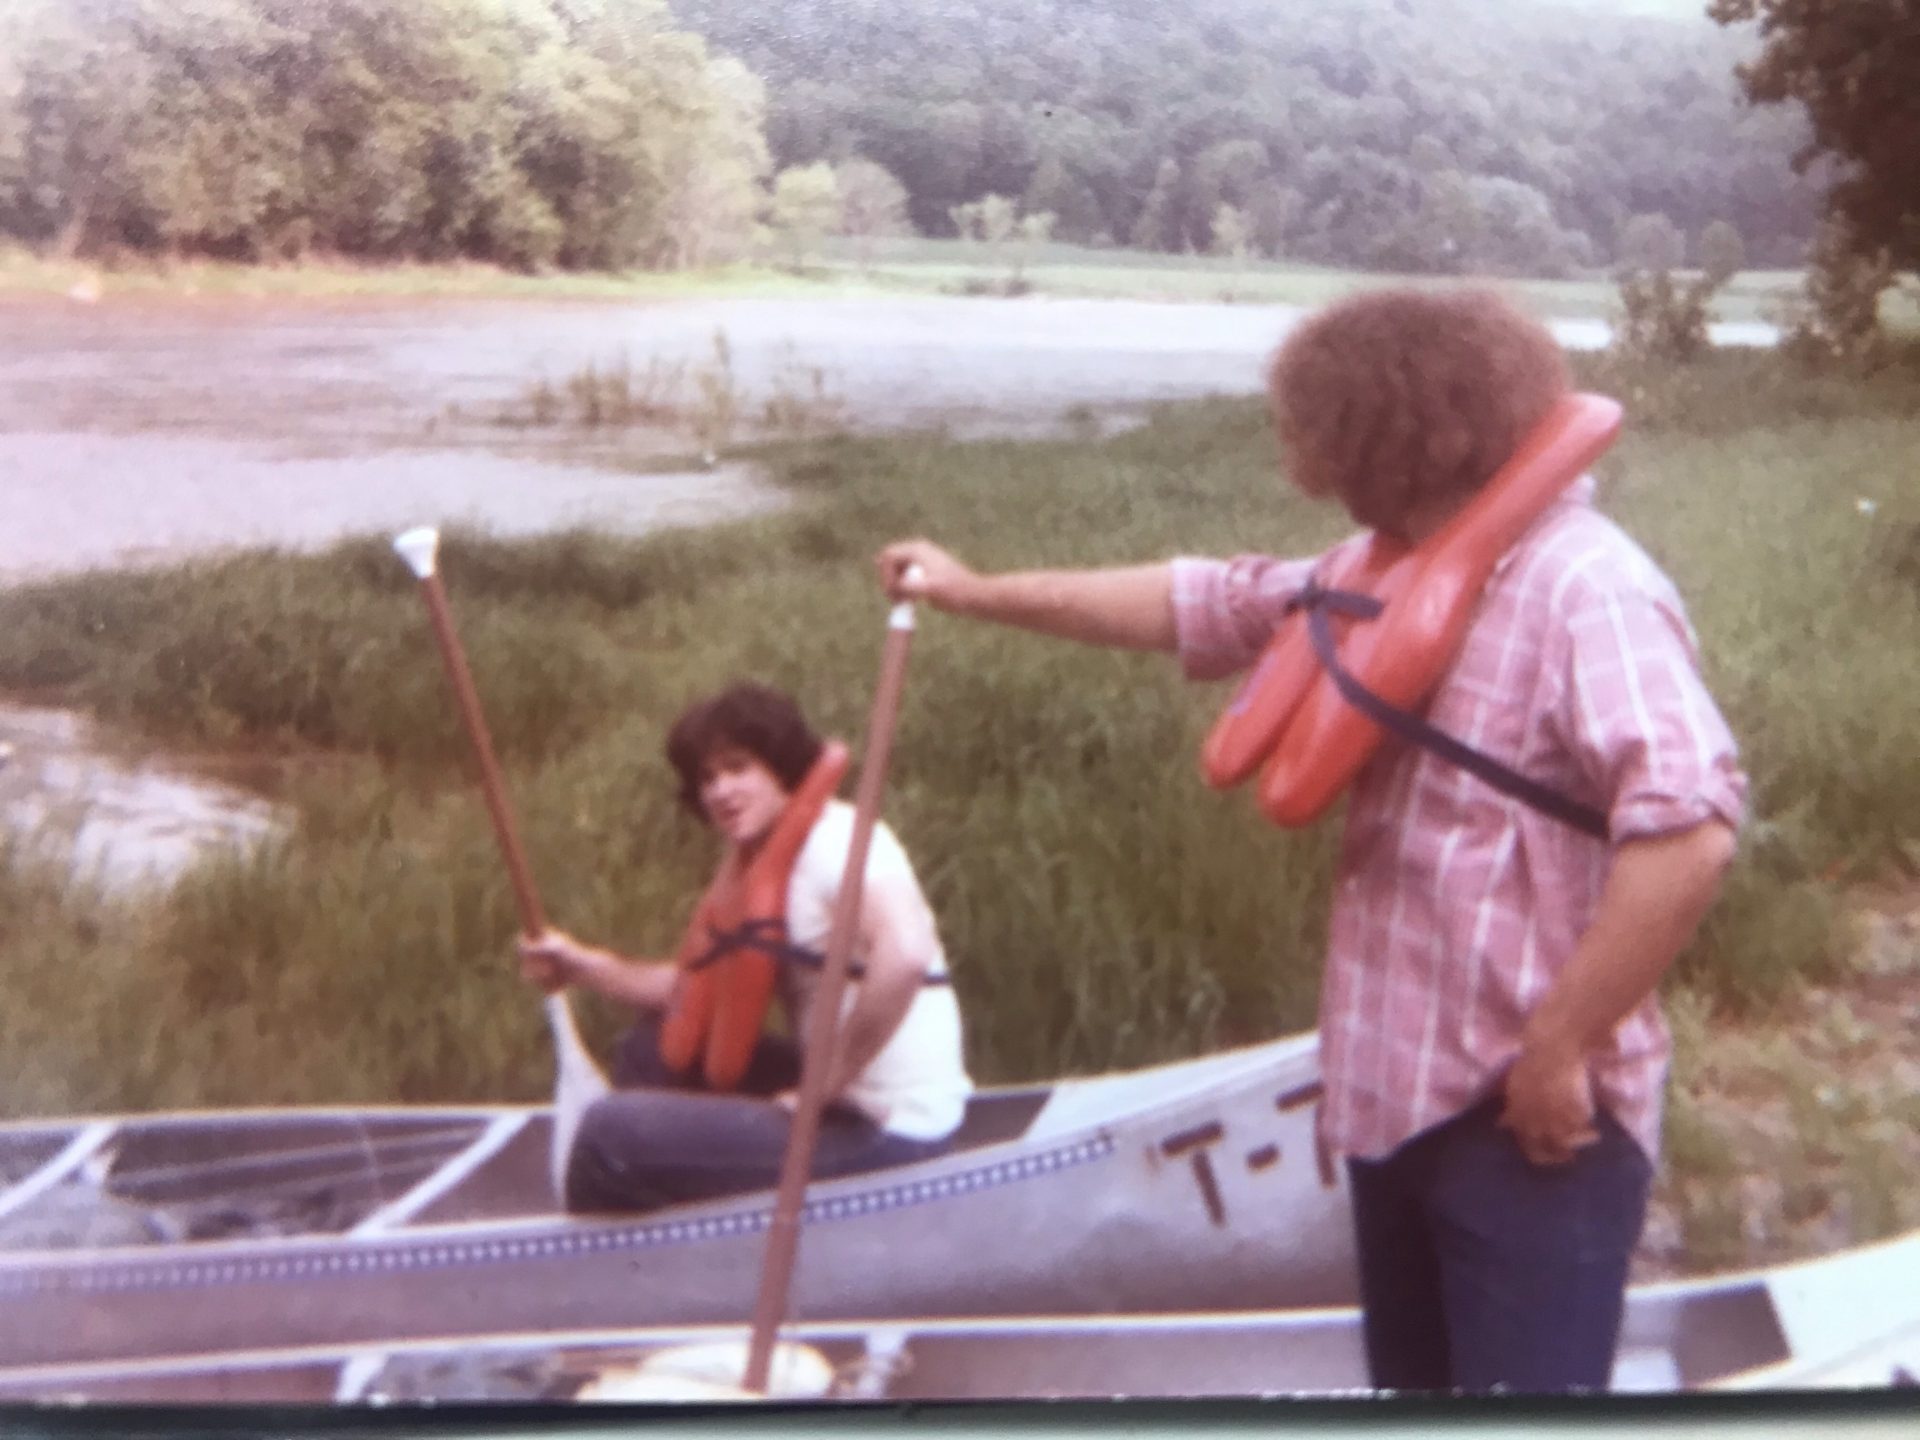 Canoeing the Delaware River